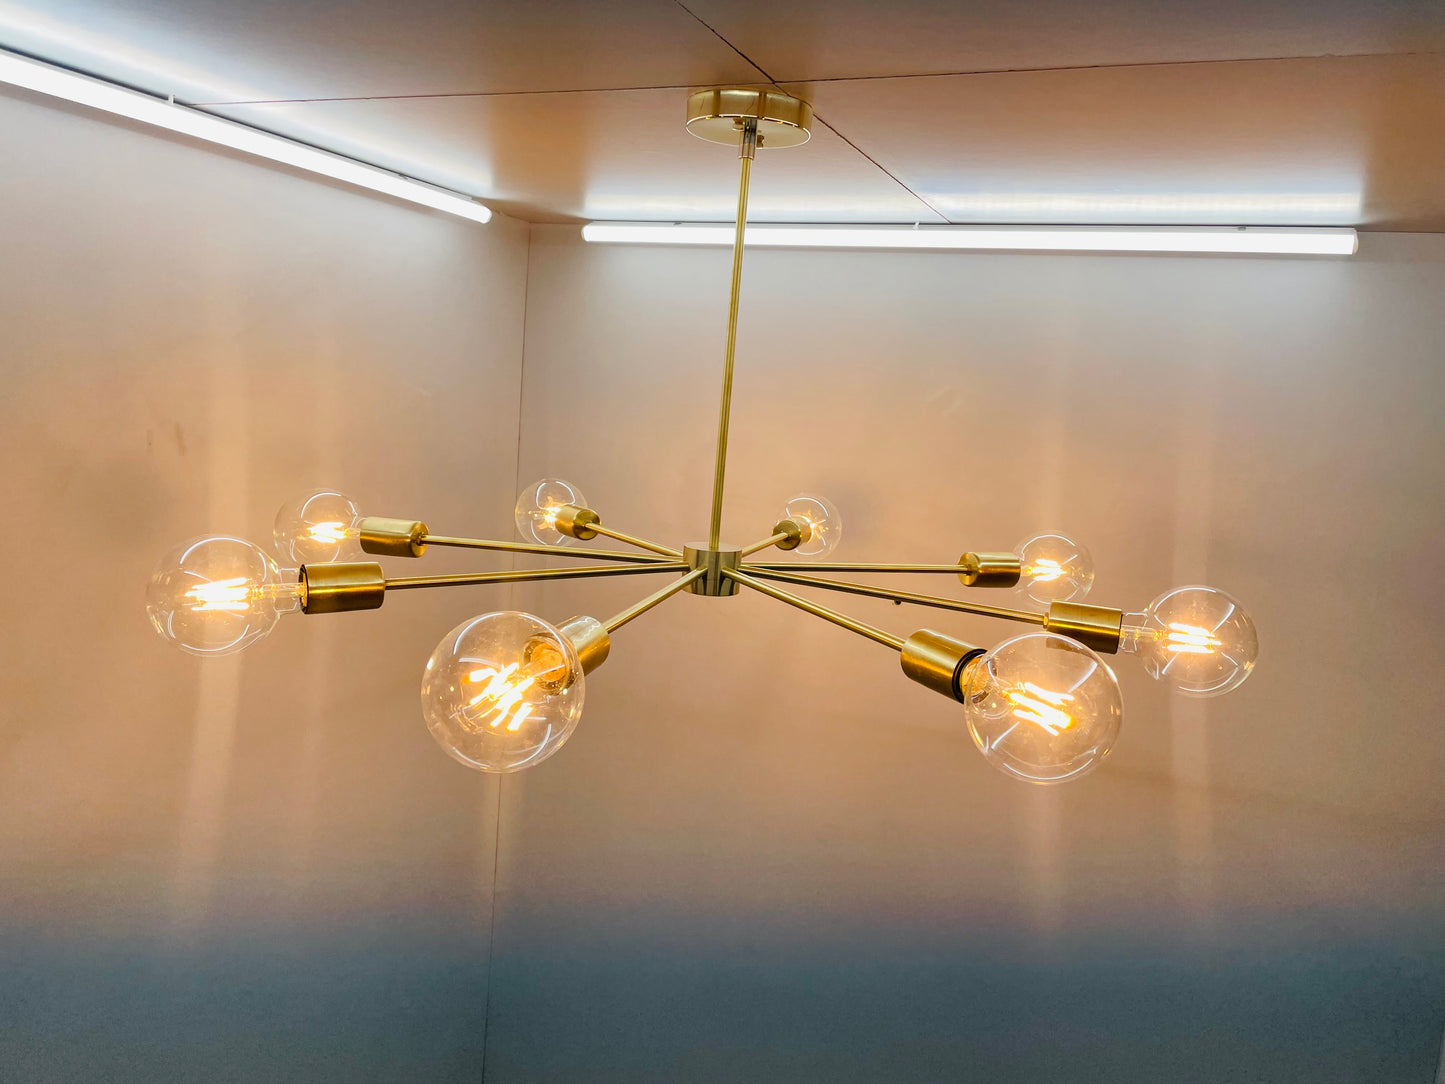 Mid Century Stilnovo Brass Sputnik Chandelier Handmade Brass Ceiling Lamp Light 8 Arms/Lights - Global Lights Hub